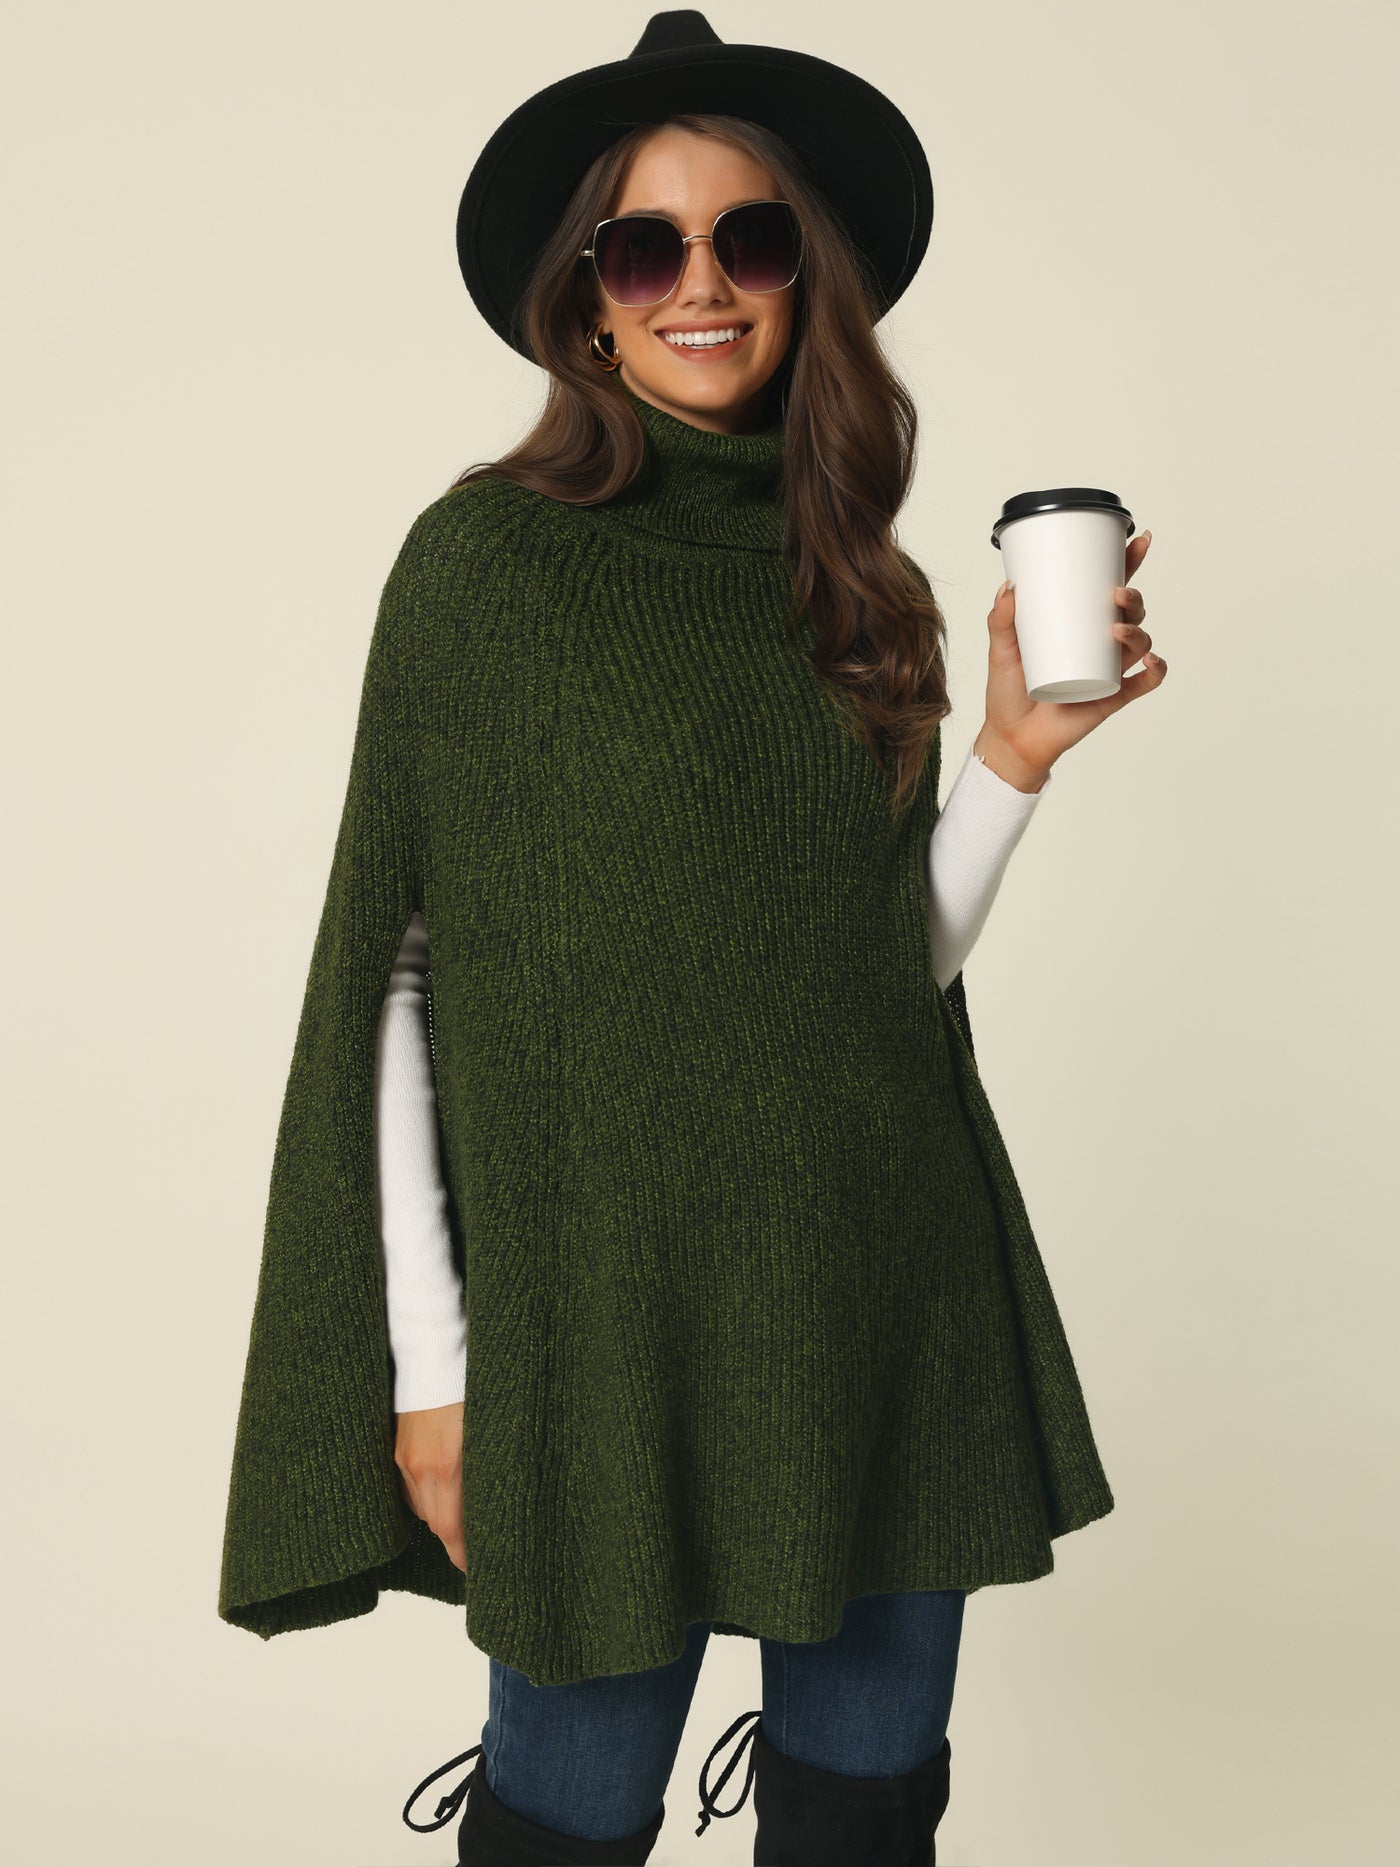 Bublédon Women's Turtleneck Fashion Chunky Knit Cape Sweater